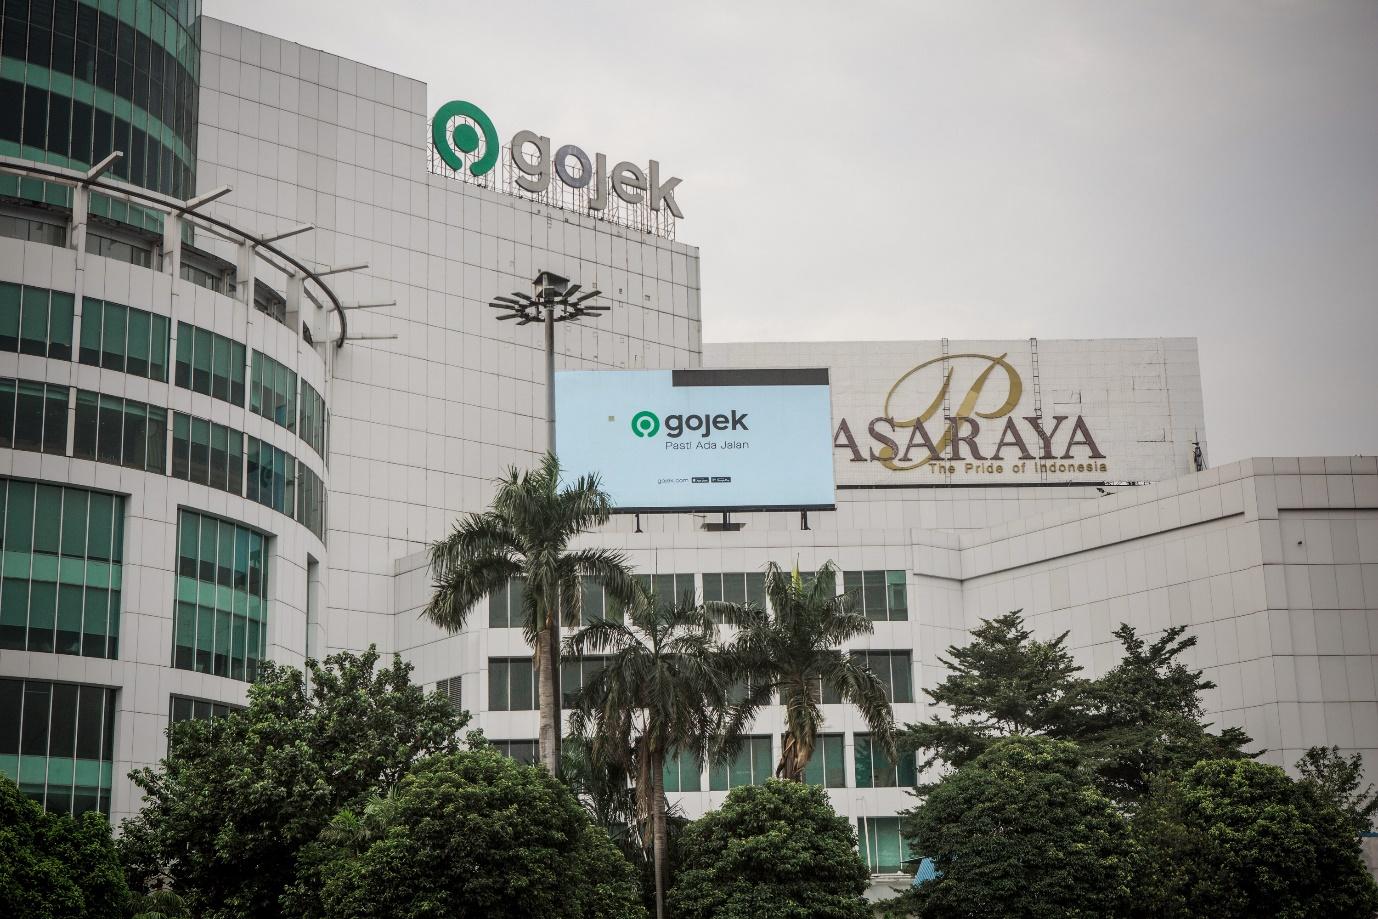 Gojek headquarters at Blok M, Jakarta, Indonesia.